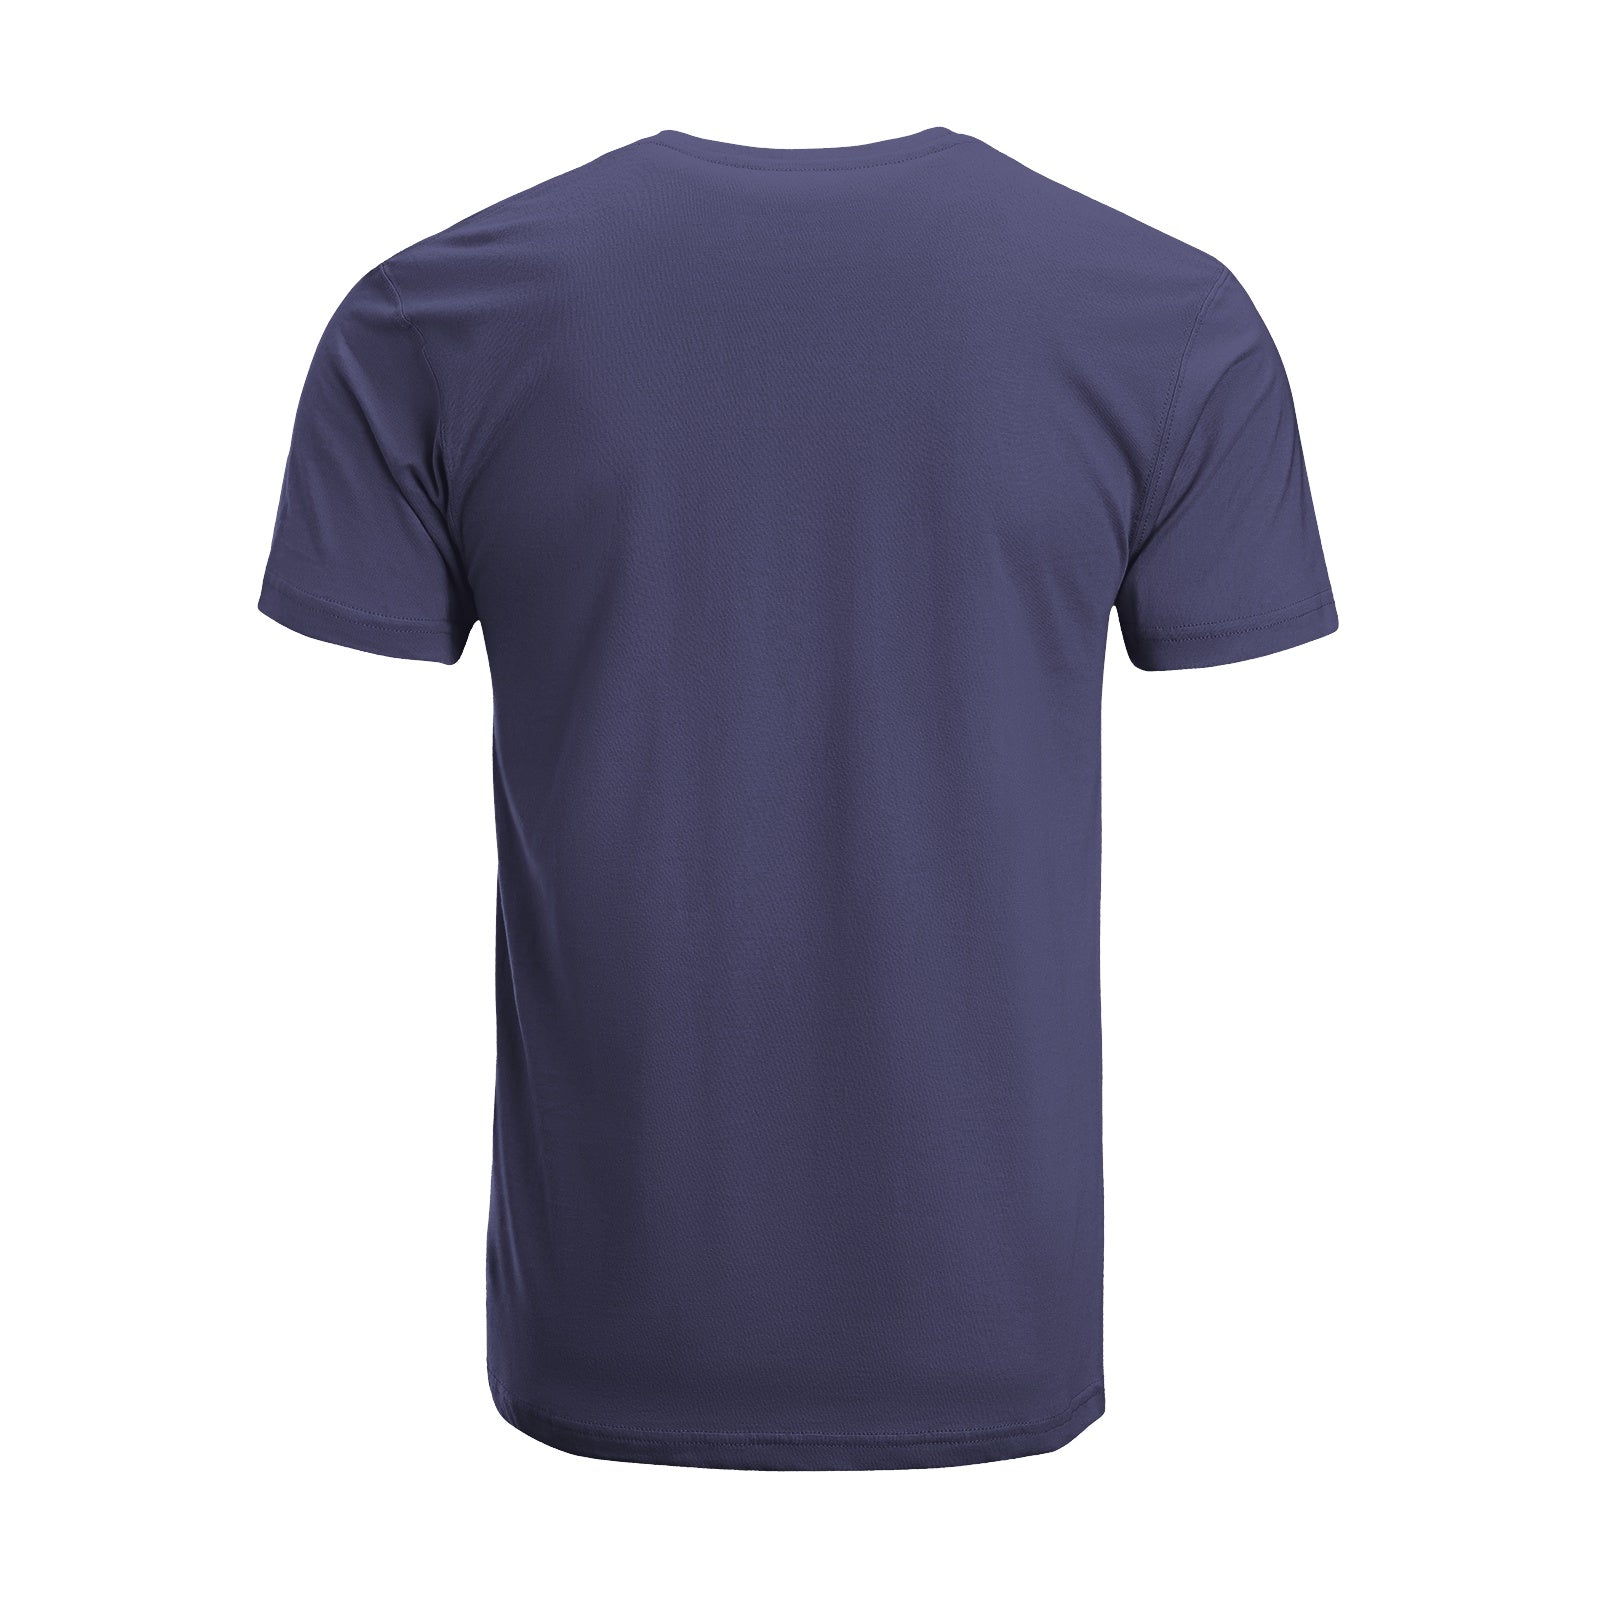 Unisex Short Sleeve Crew Neck Cotton Jersey T-Shirt Gym No. 39 - Tara-Outfits.com